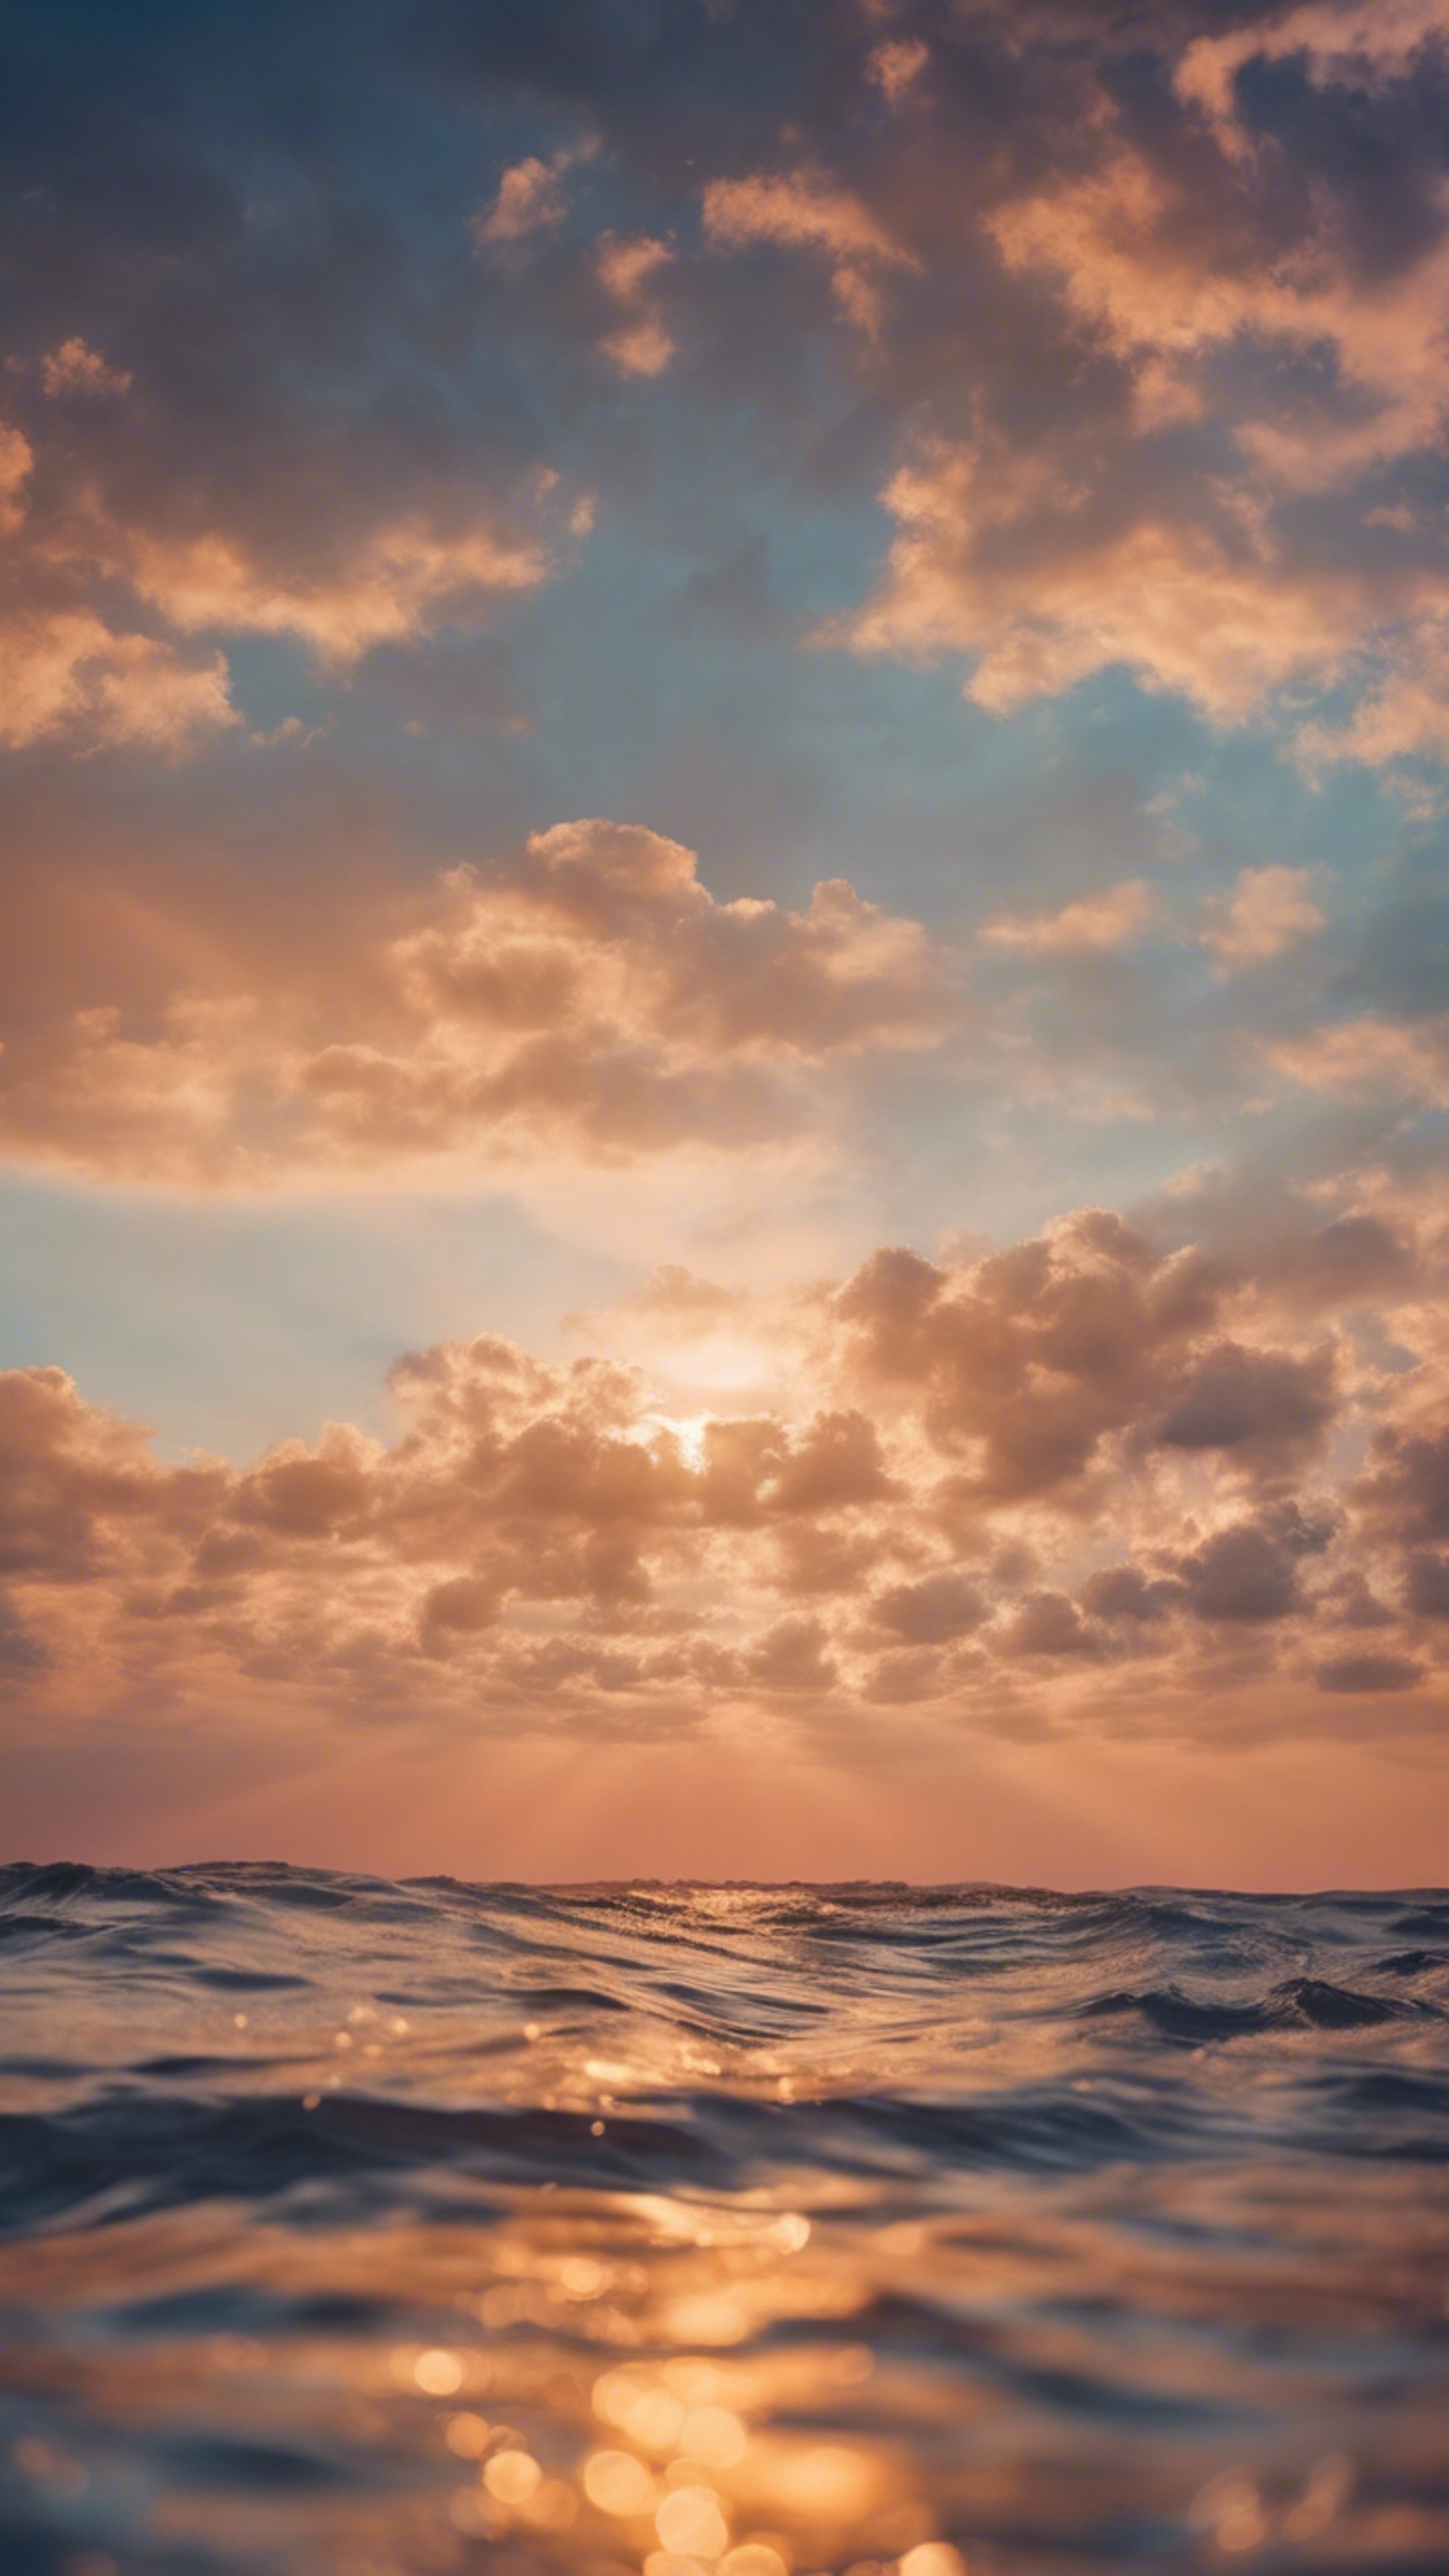 A dream scenario of a deep sapphire sea meeting the heavenly light peach hues of the sky at sunset. Hintergrund[ea94eb2fc81f4c8faf8f]